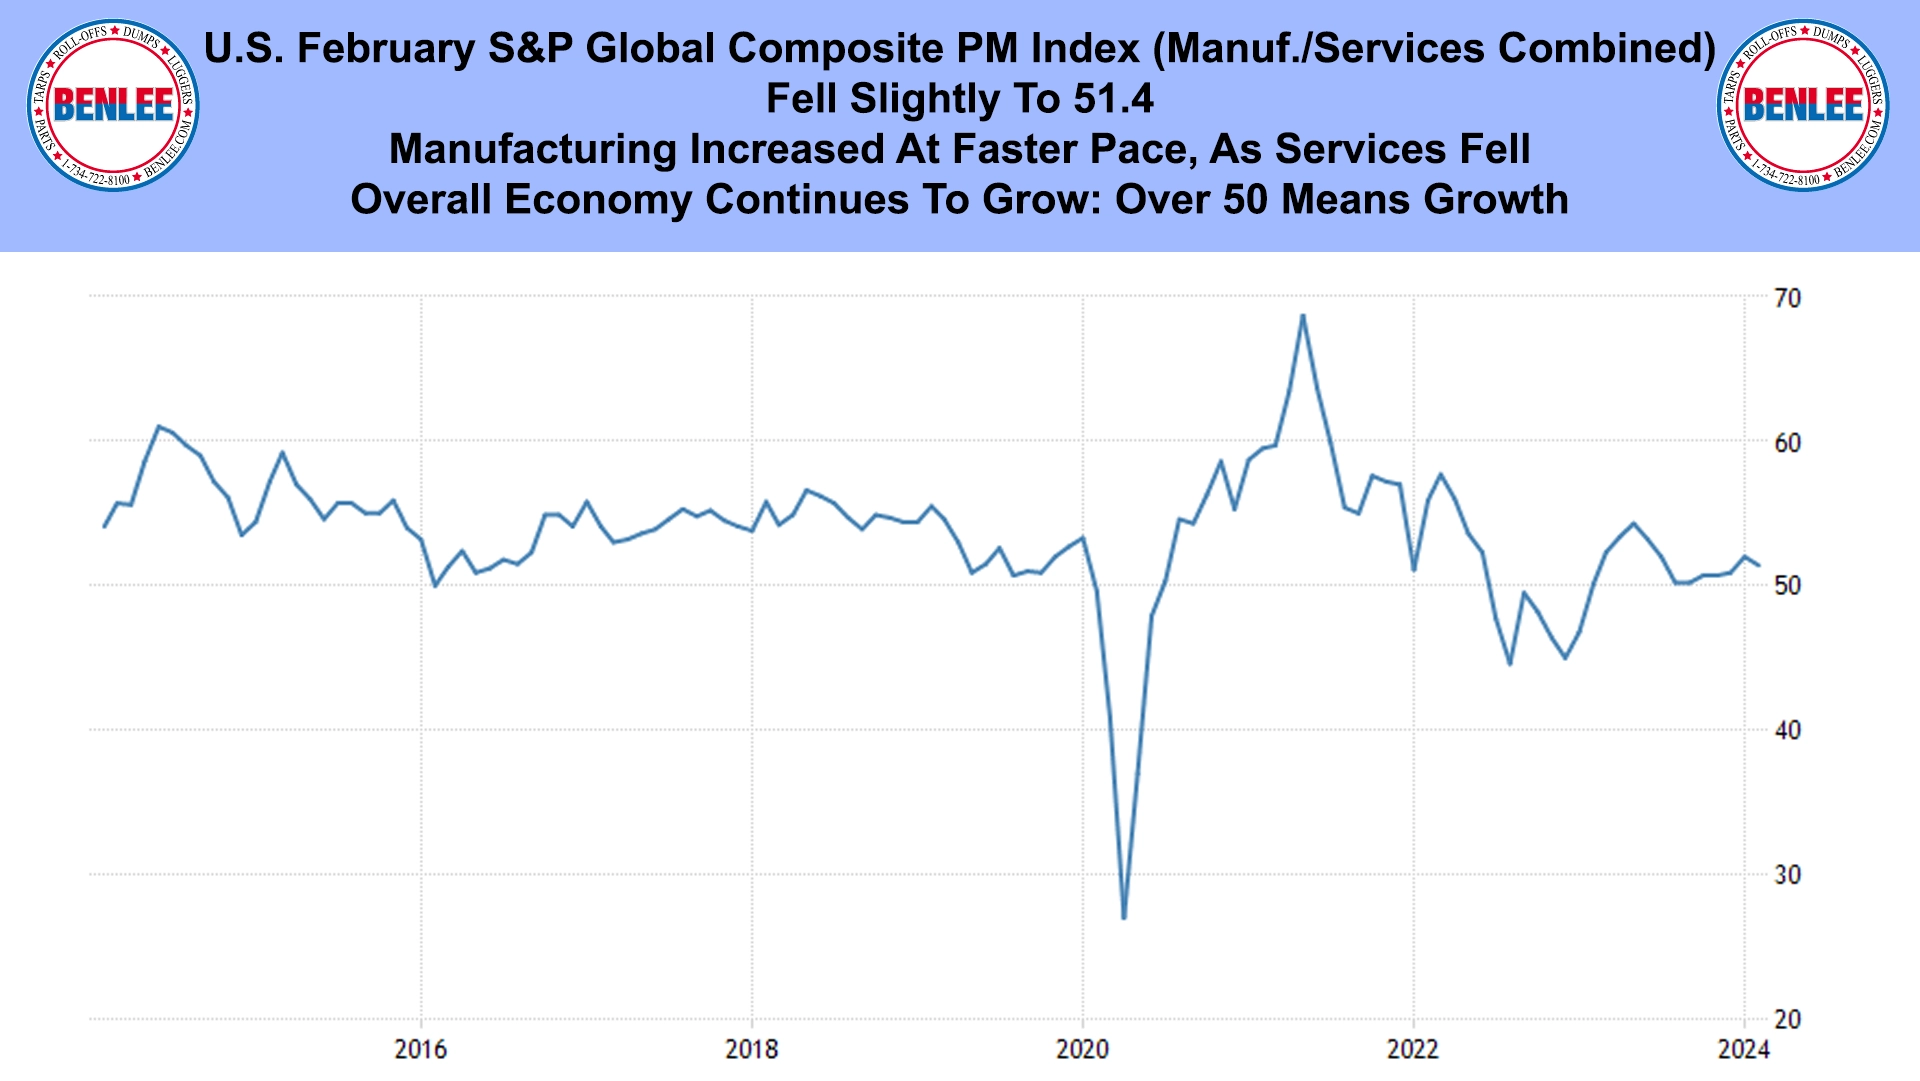 U.S. February S&P Global Composite PM Index